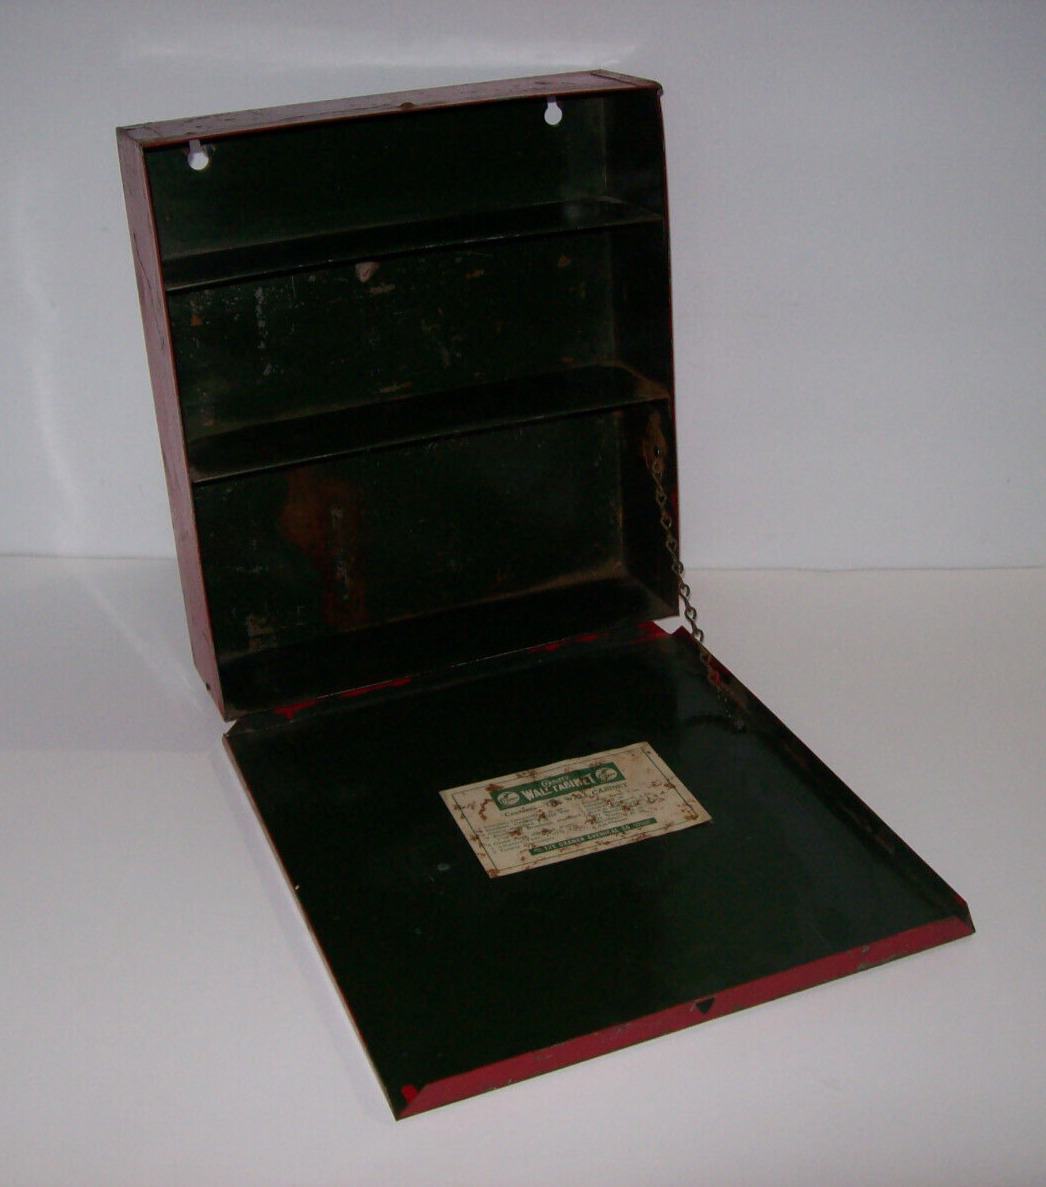 Vintage CRAMER\'s First Aid Kit, Vintage Storage Metal Wall Cabinet